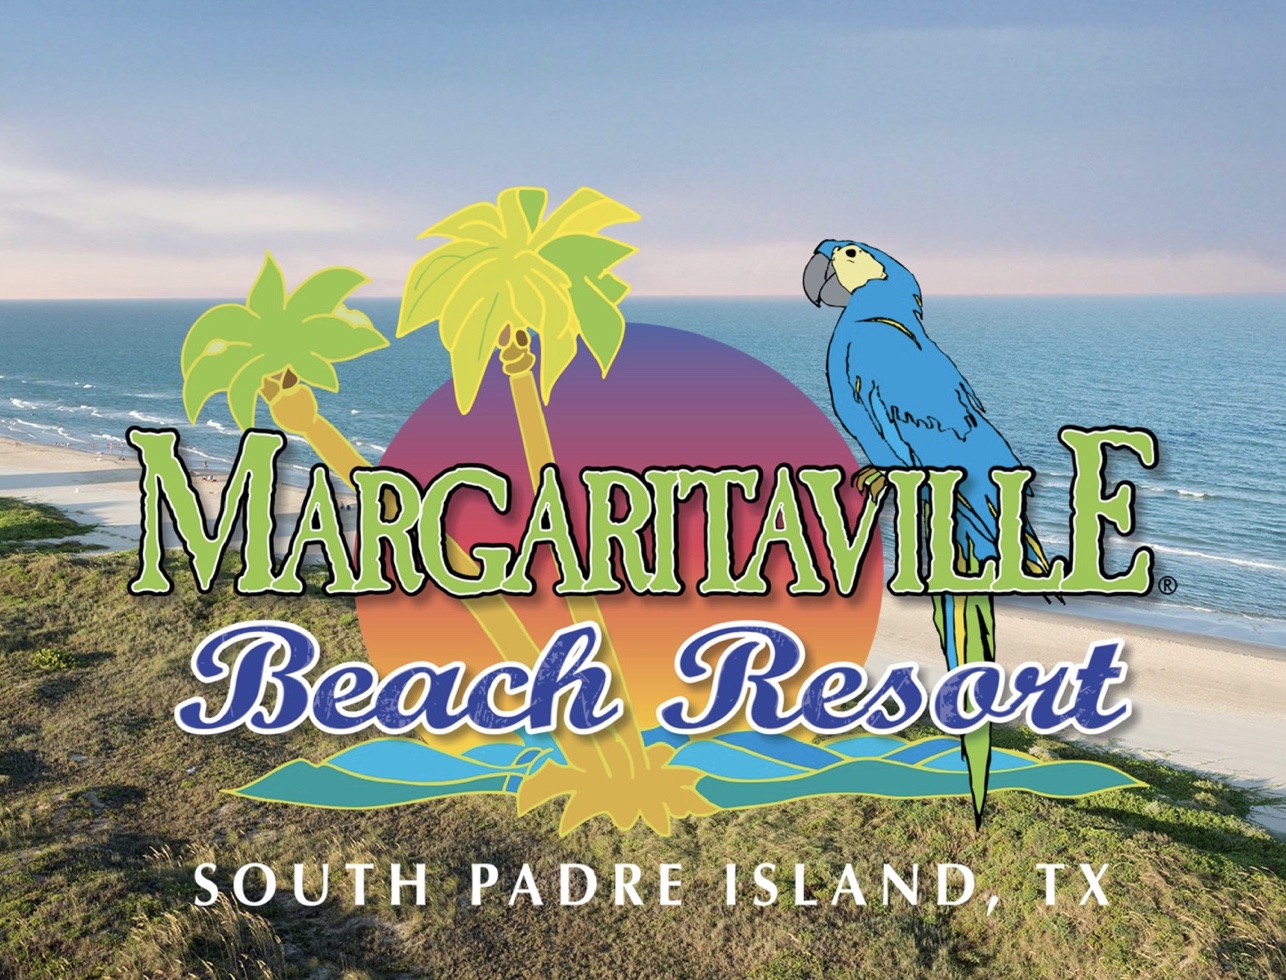 Margaritaville Beach Resort at South Padre Island

